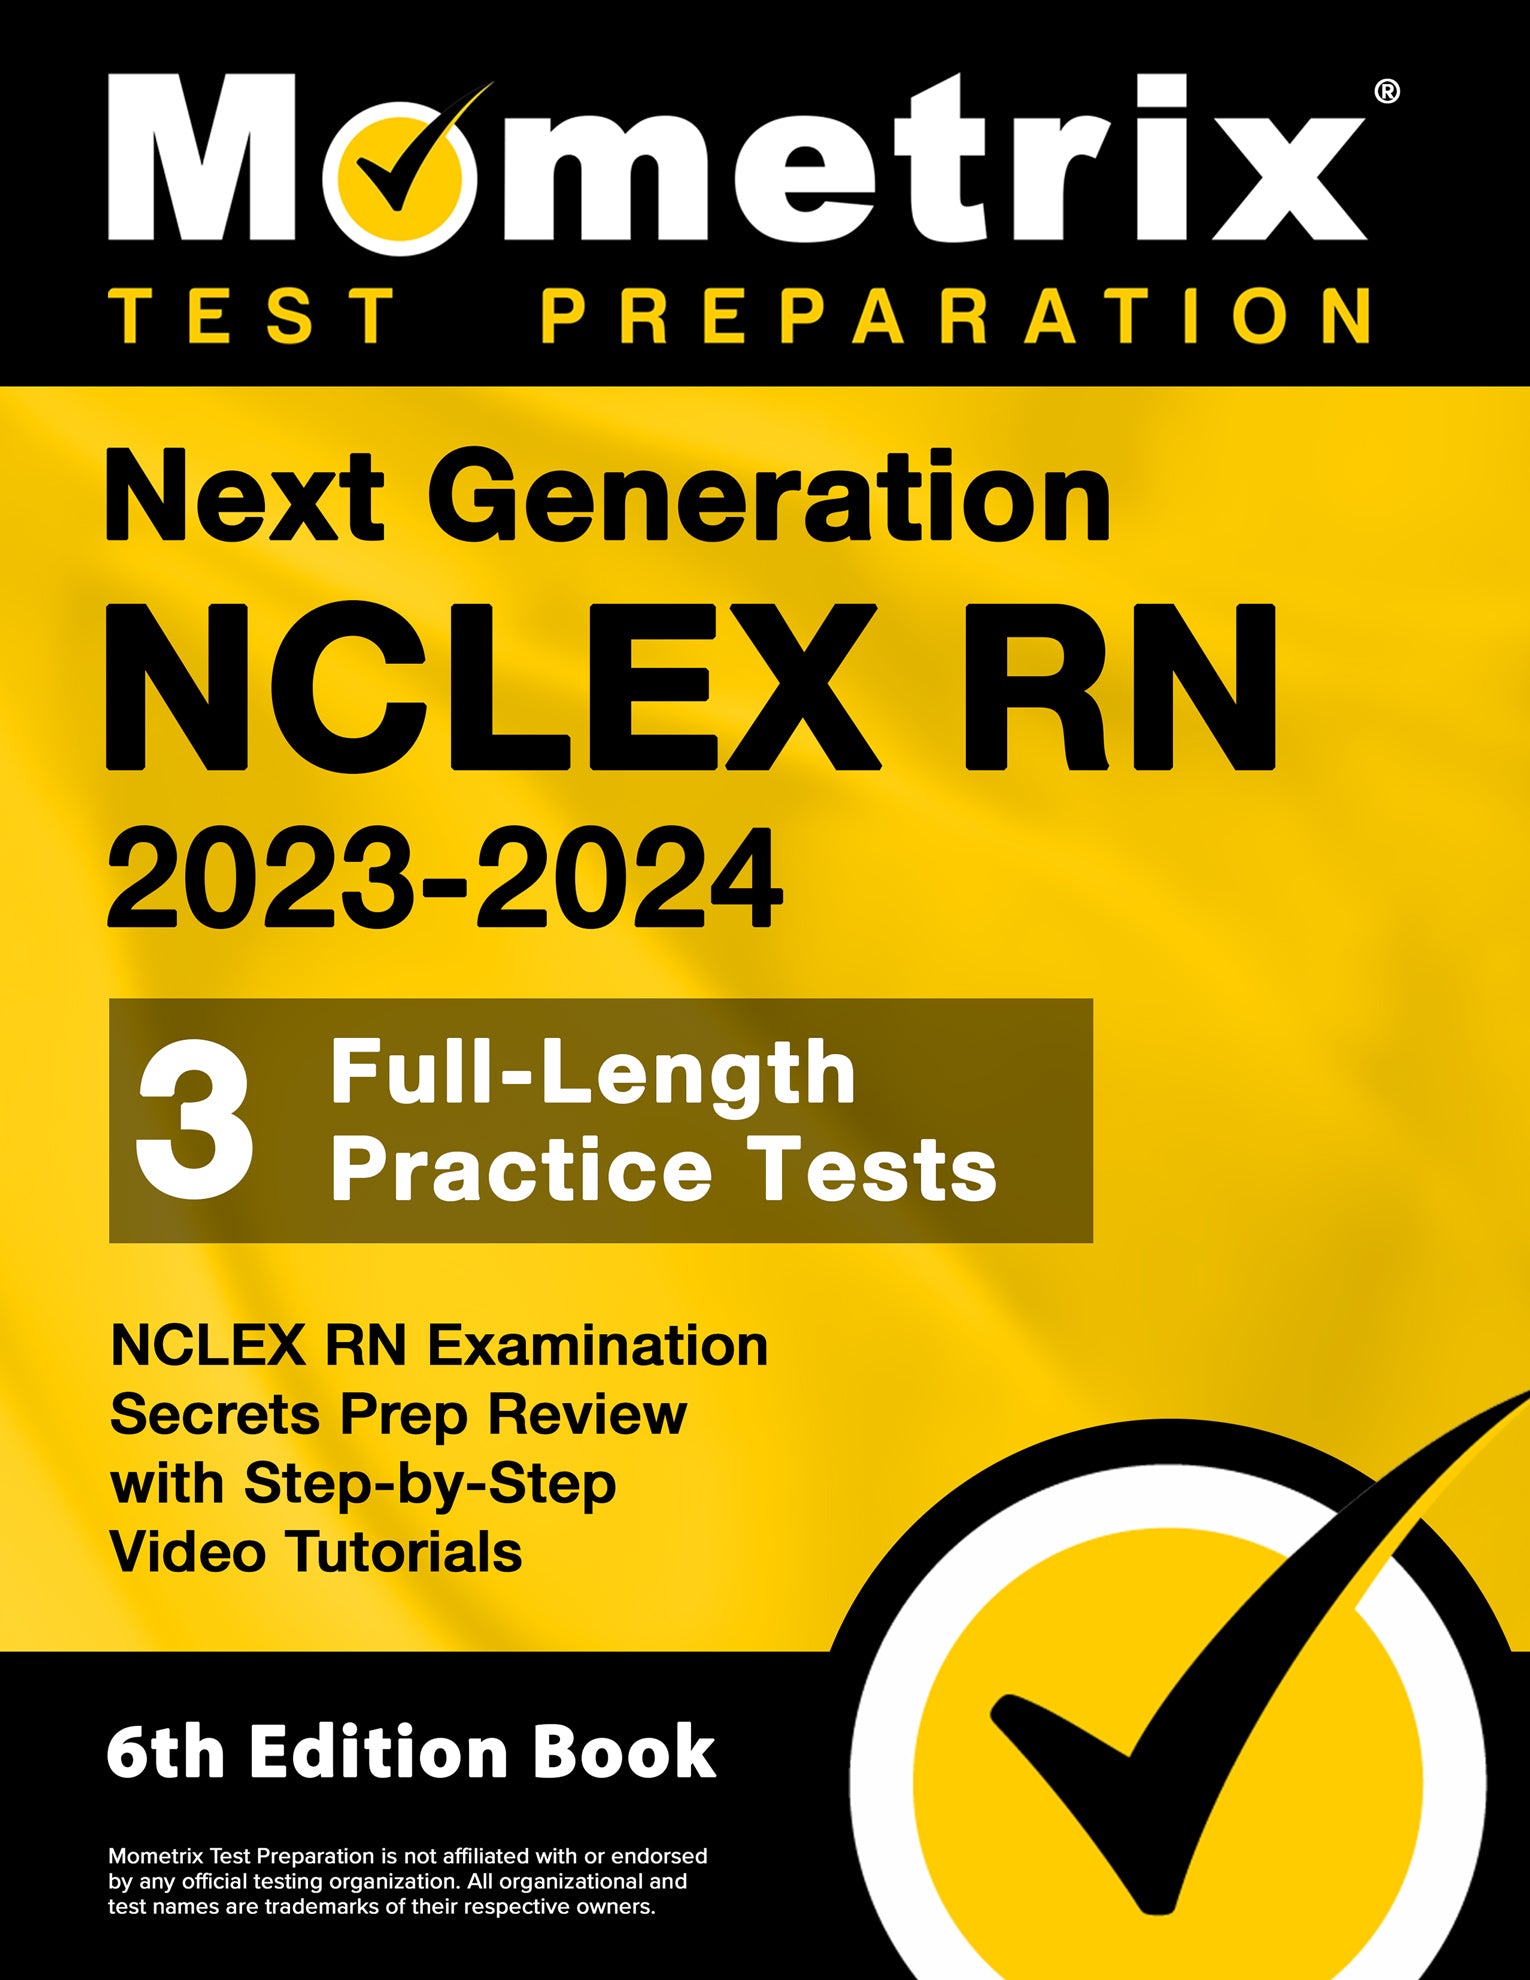 Next Generation NCLEX RN 20232024 NCLEX RN Examination Secrets Prep